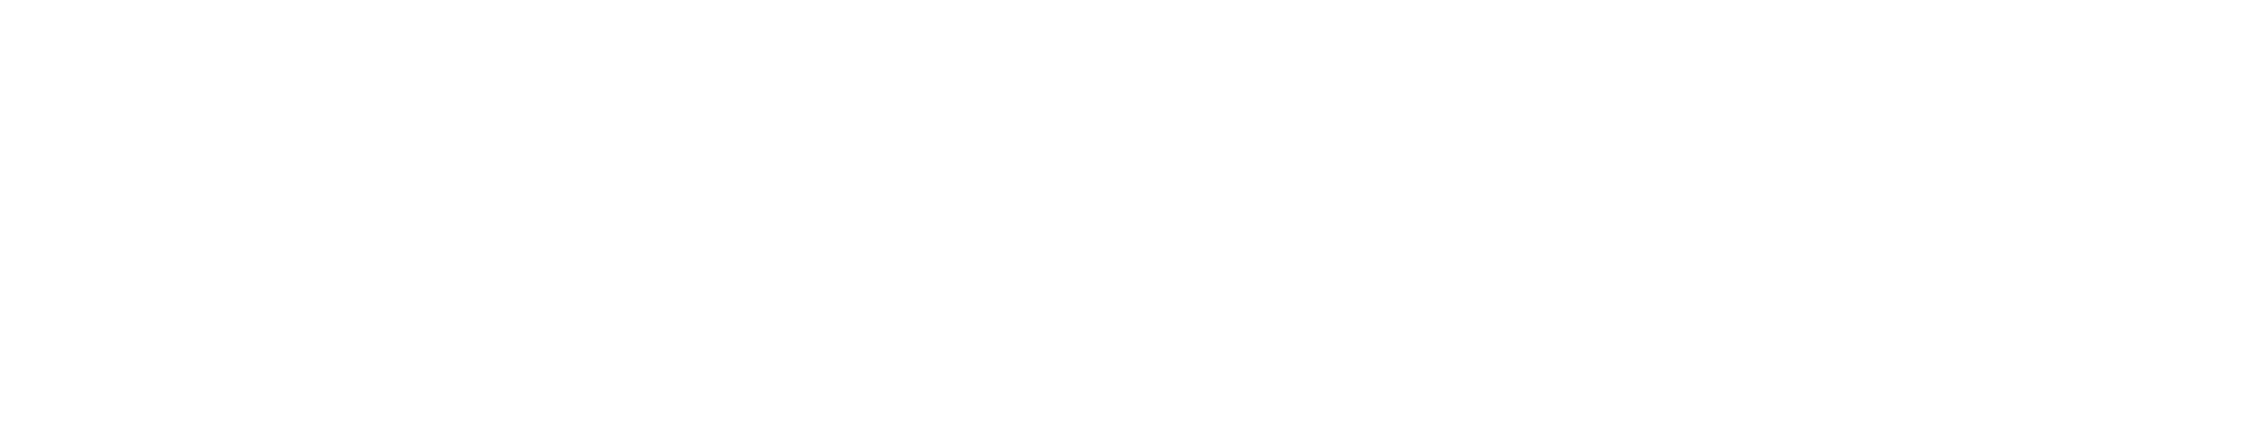 Code Poets 